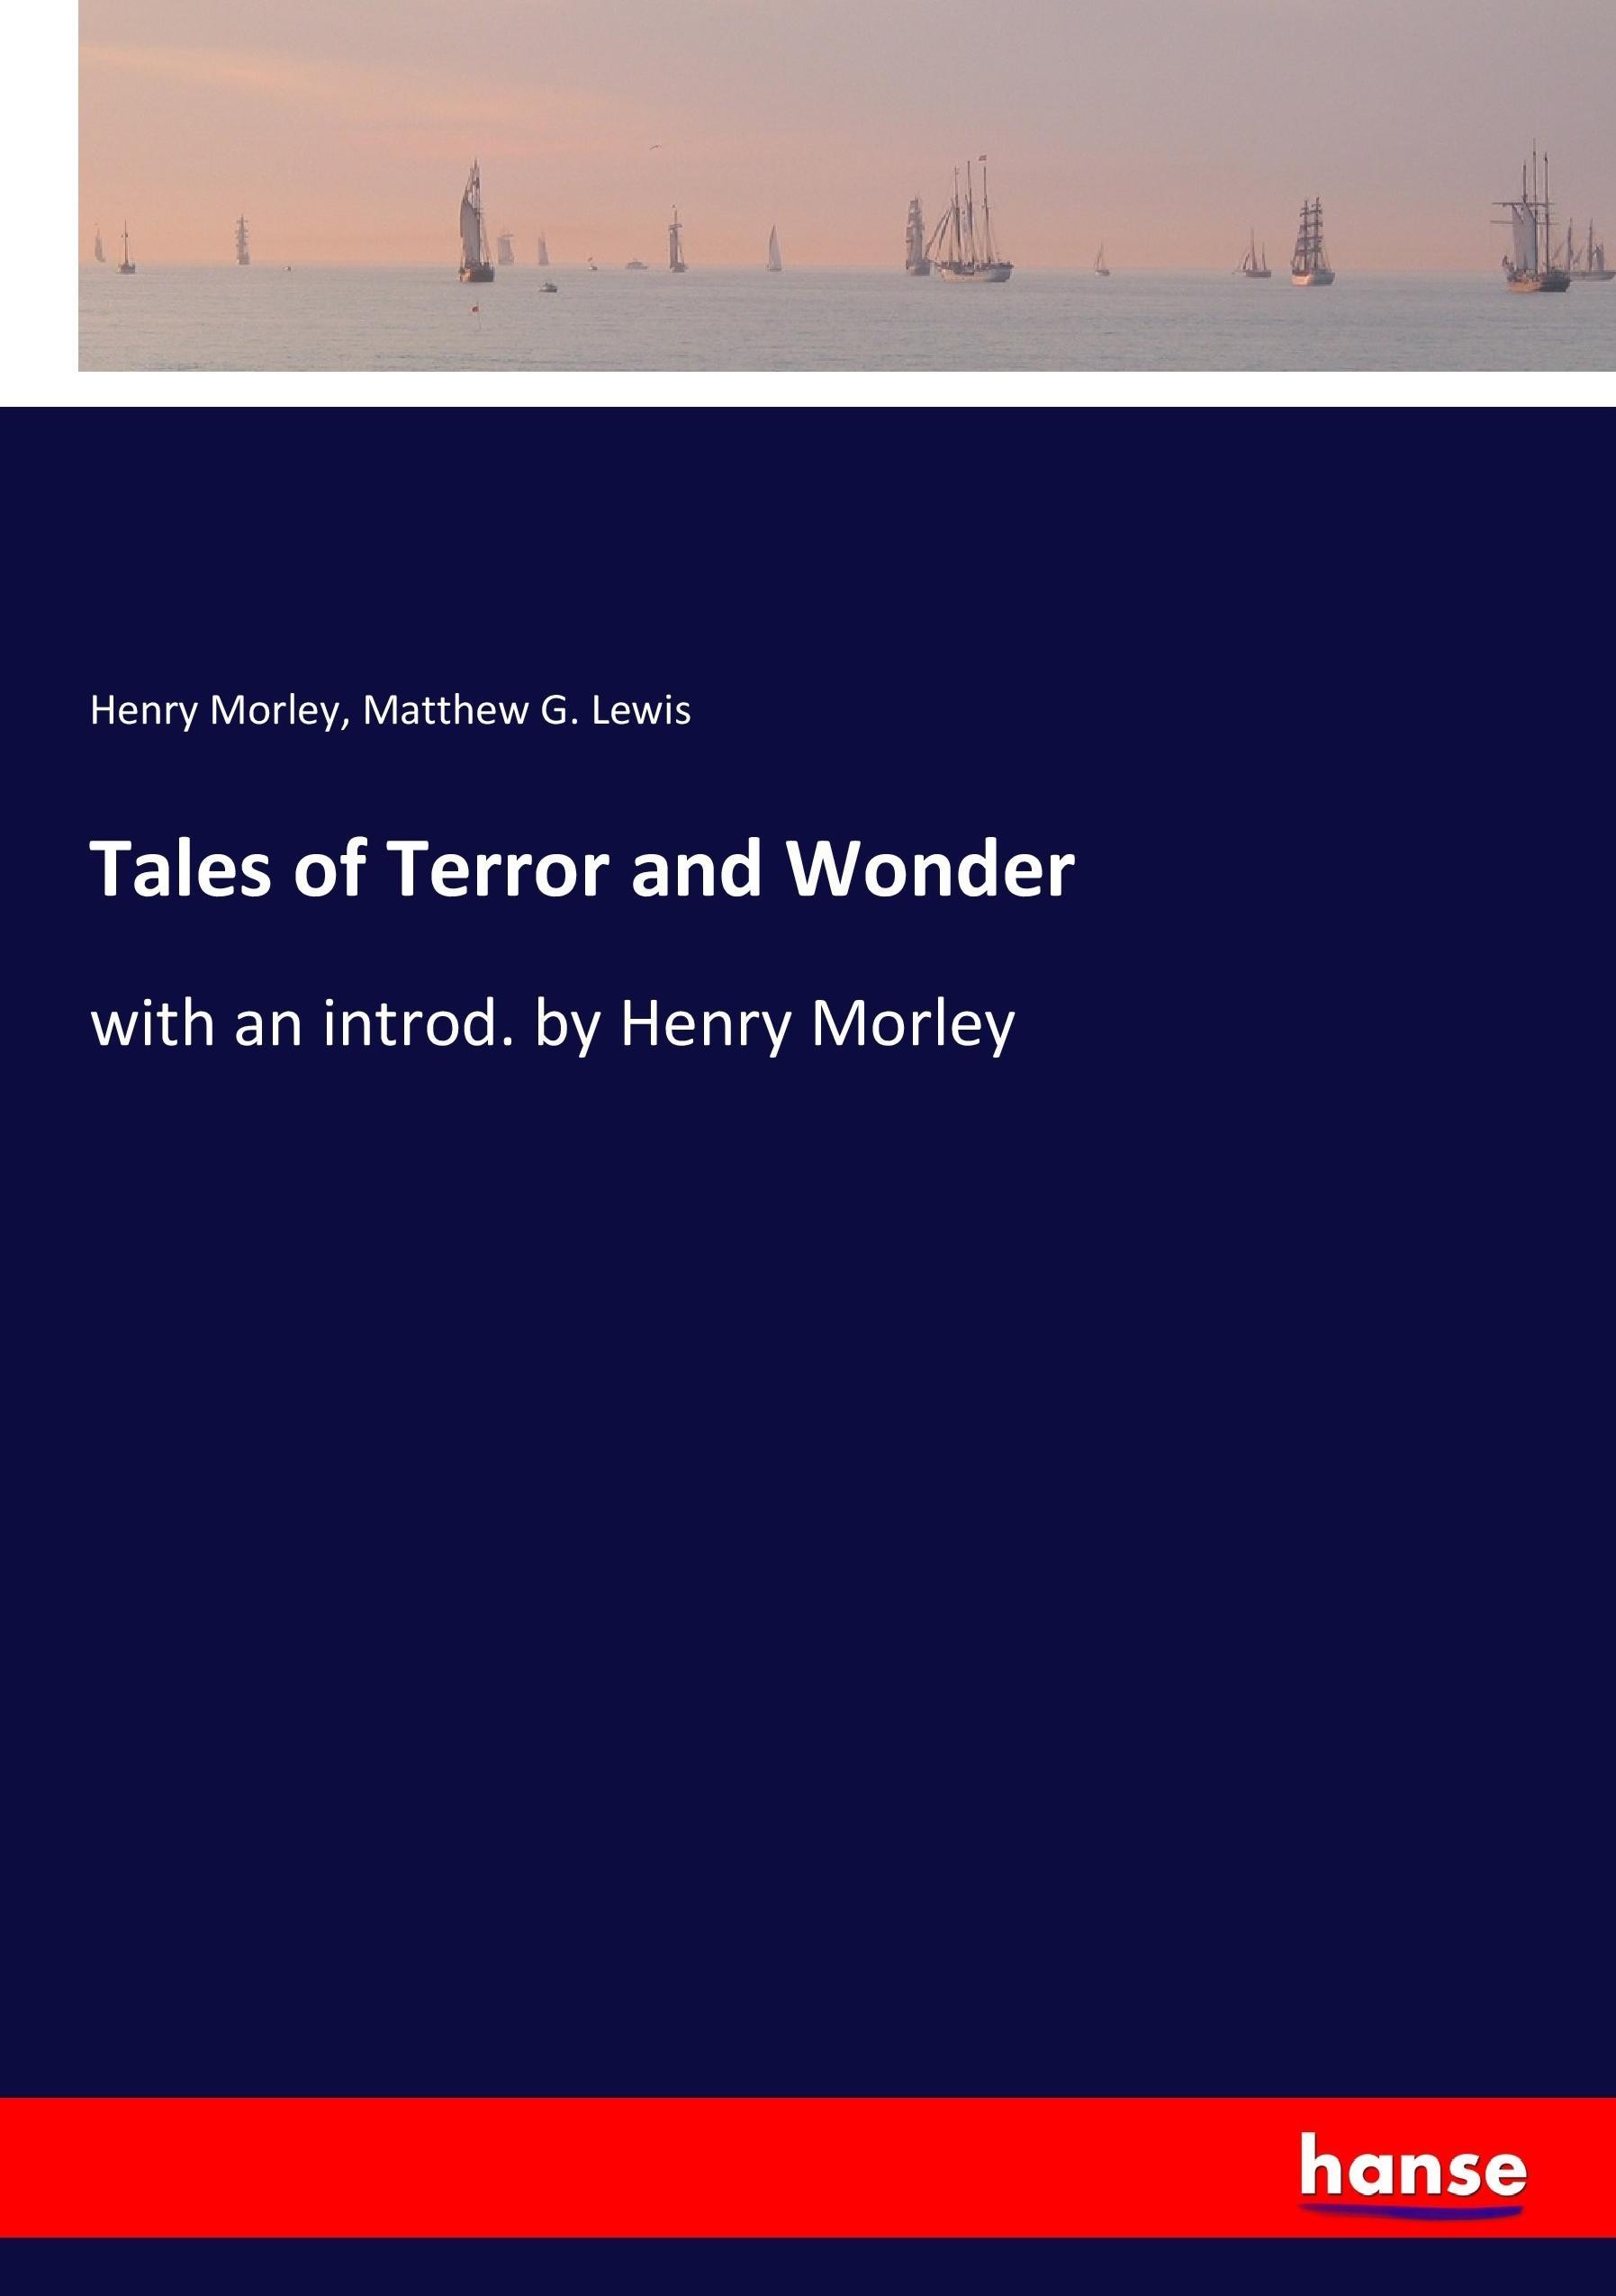 Tales of Terror and Wonder - Morley, Henry Lewis, Matthew G.